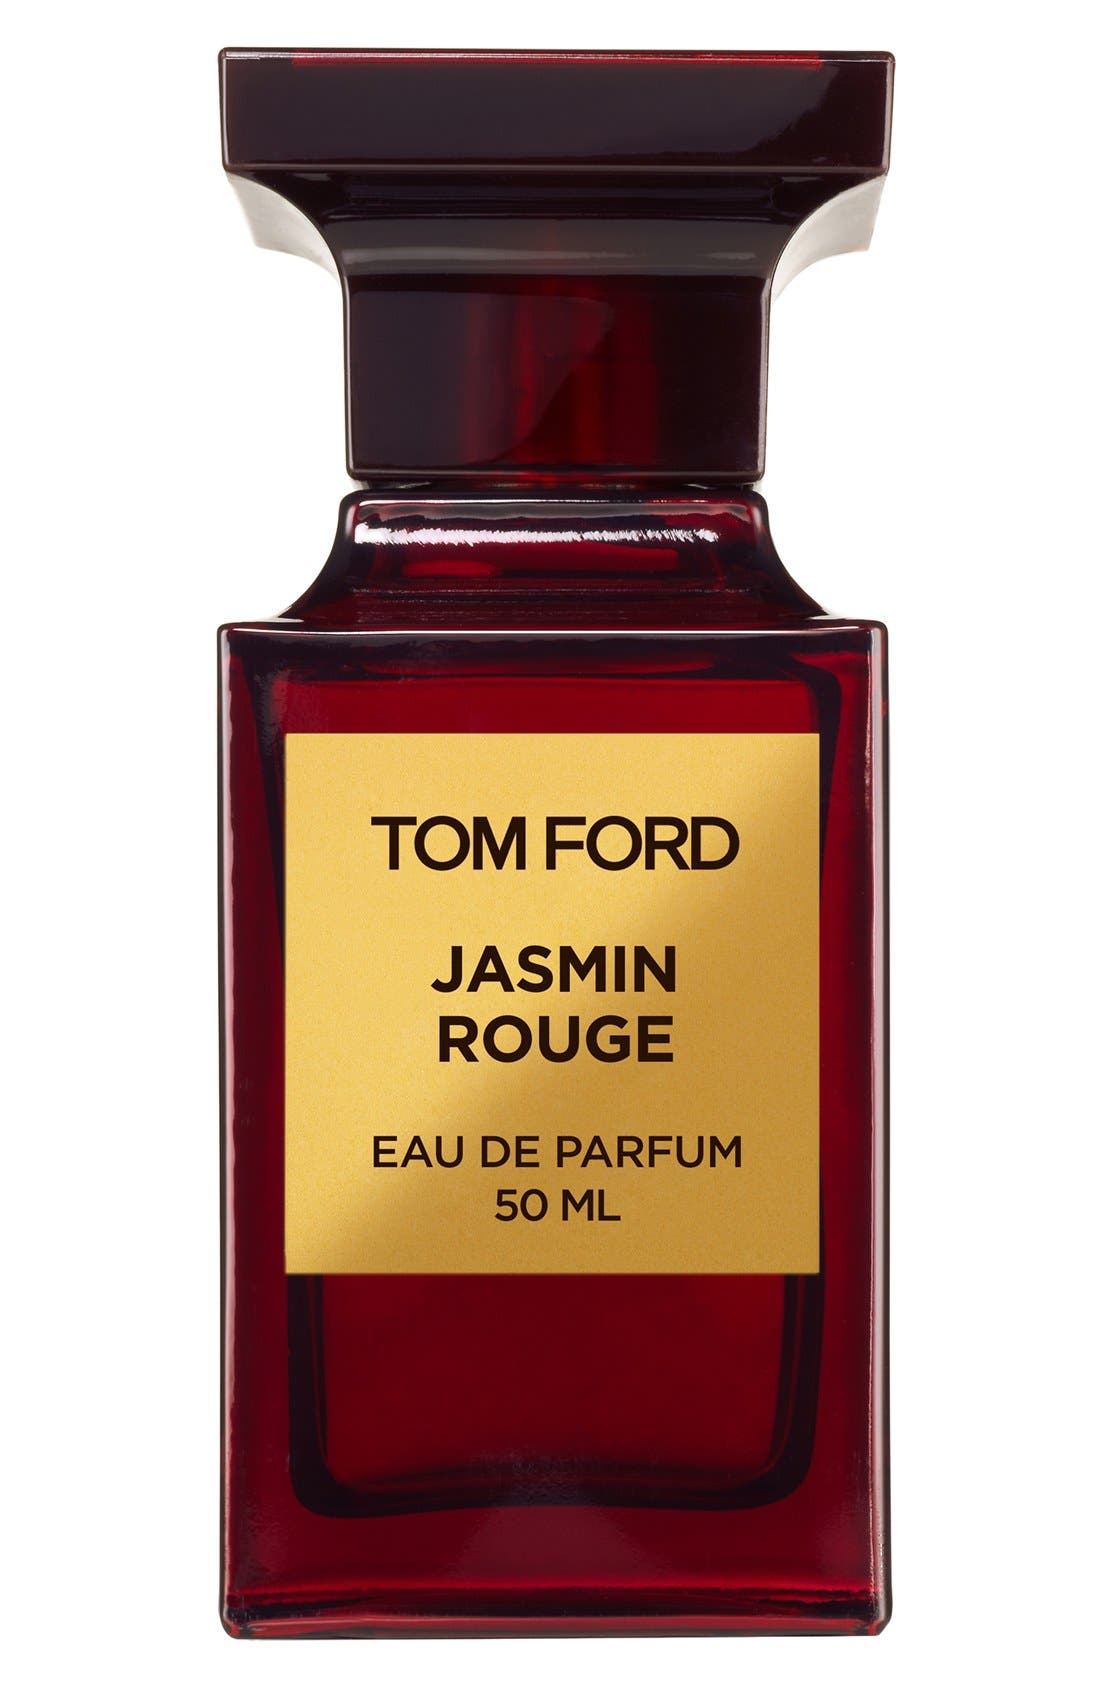 tom ford perfume red bottle